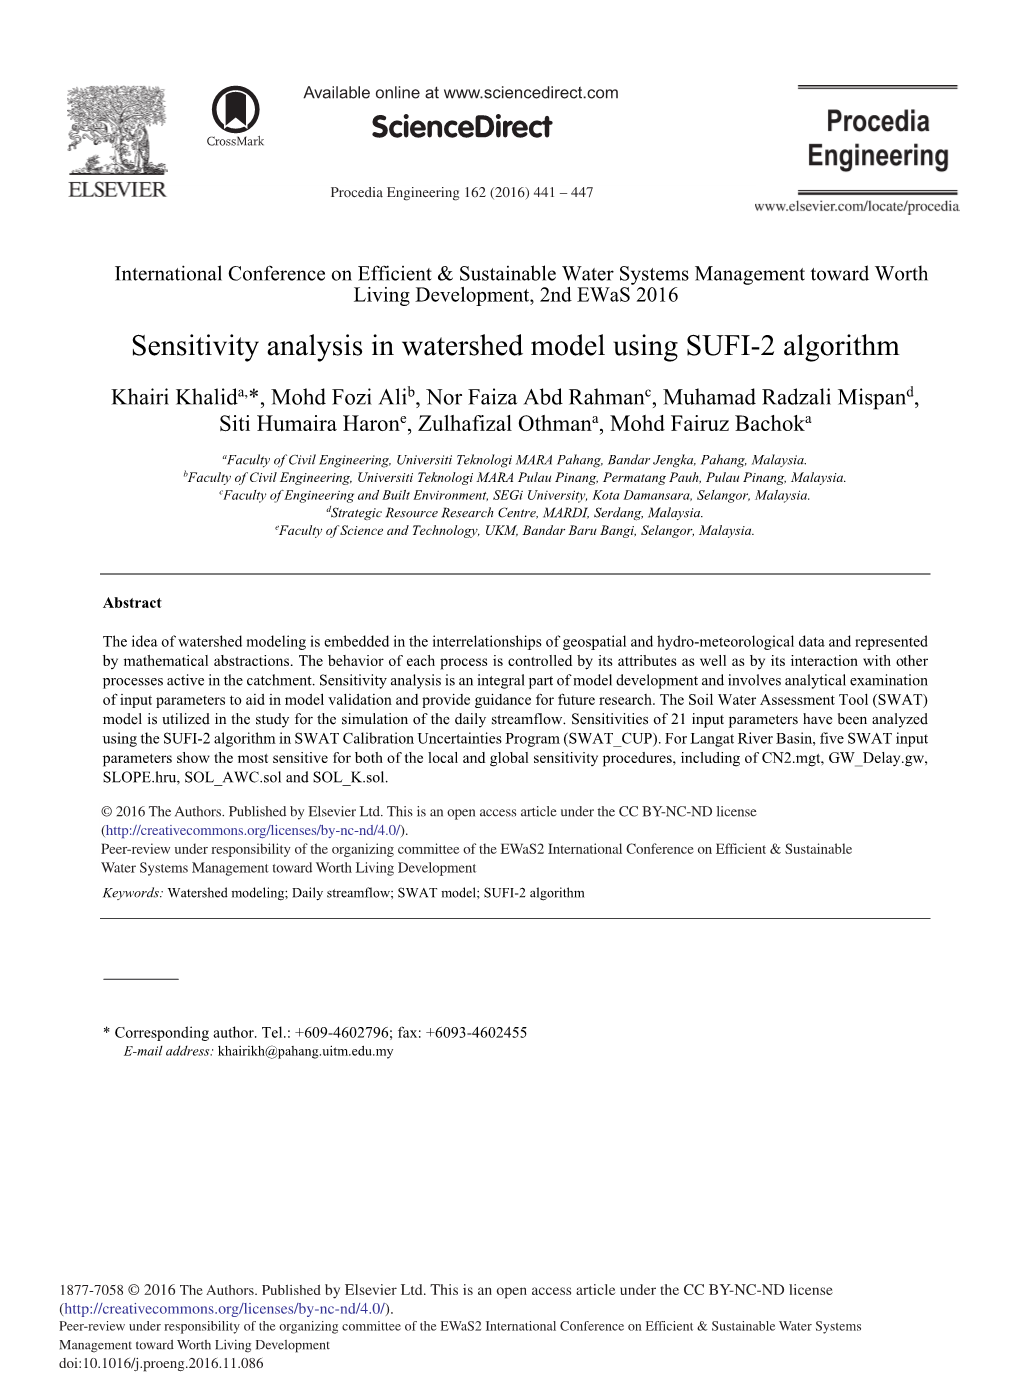 Sensitivity Analysis in Watershed Model Using SUFI-2 Algorithm